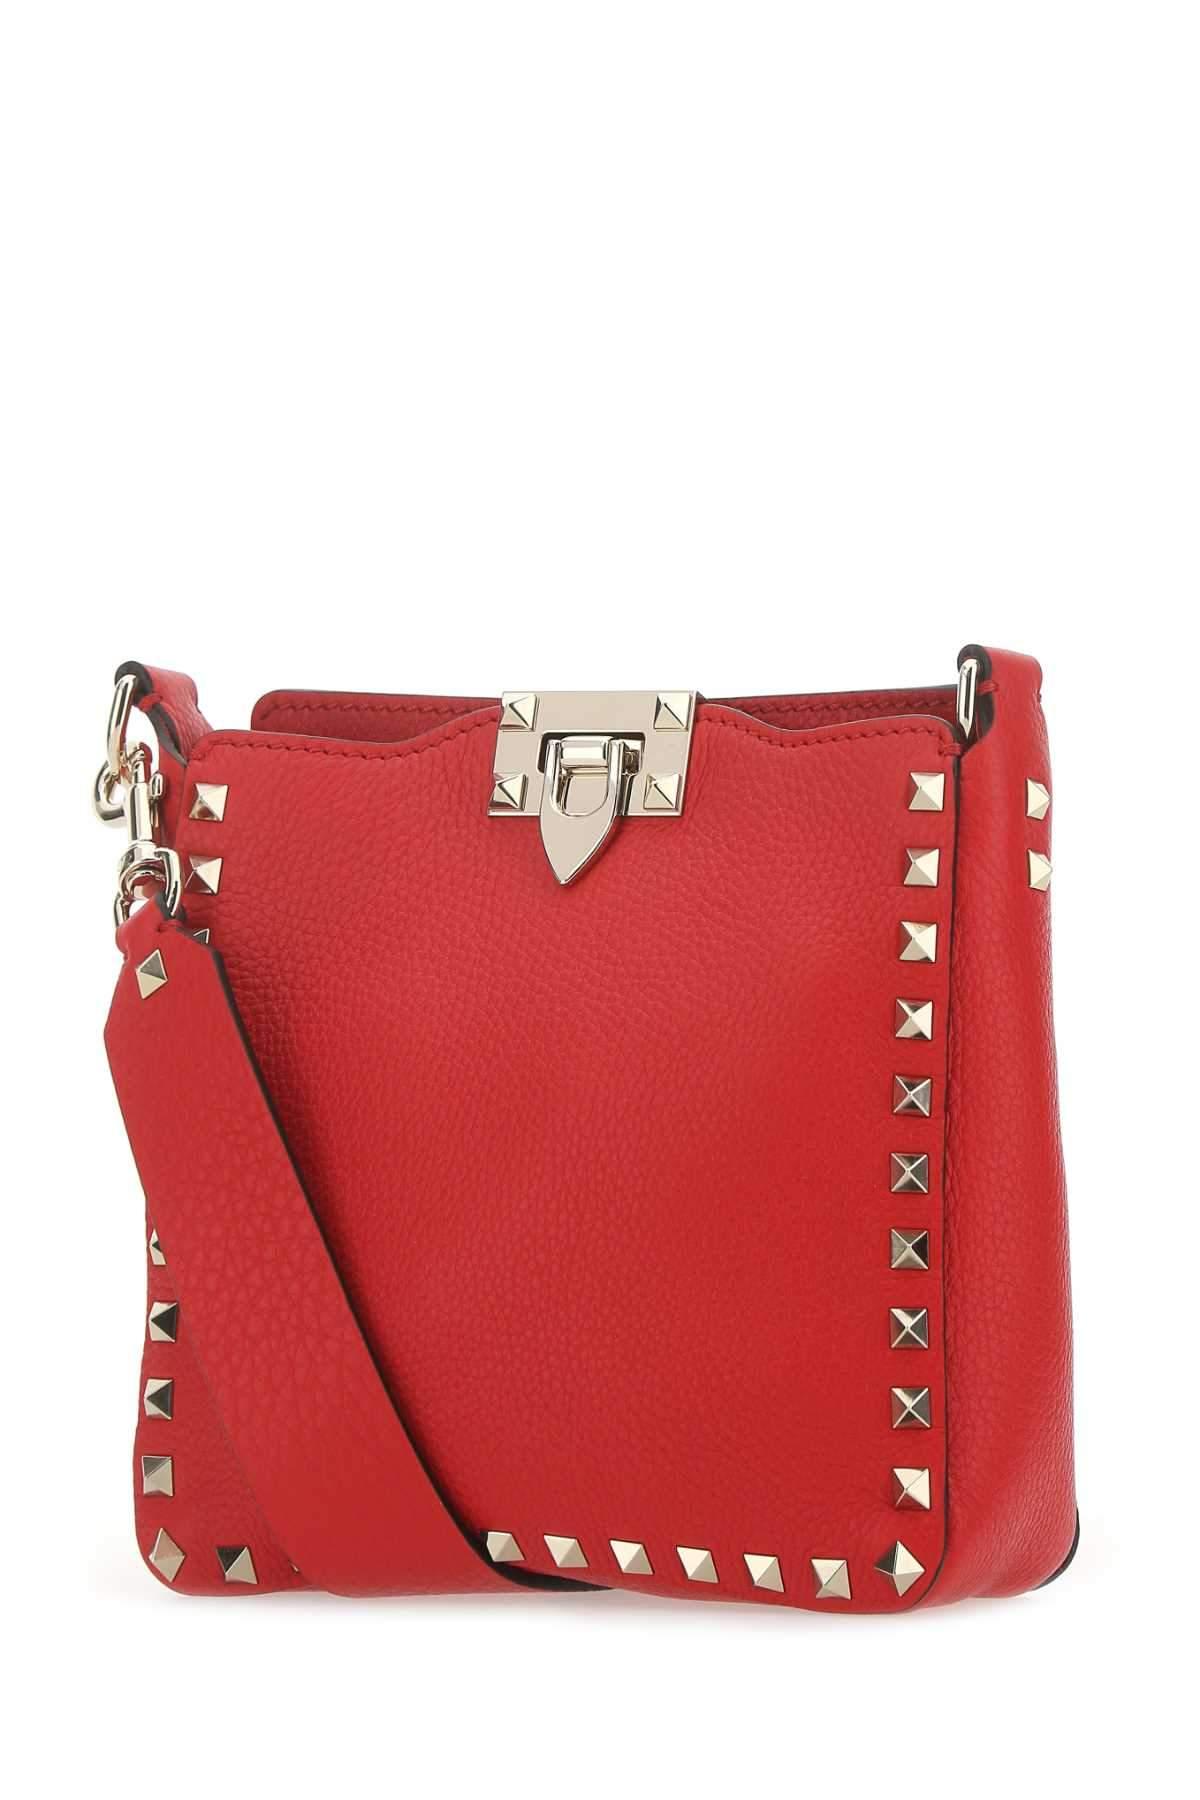 Regnbue tapperhed Hubert Hudson Valentino Leather Garavani Rockstud Mini Hobo Bag in Red - Lyst